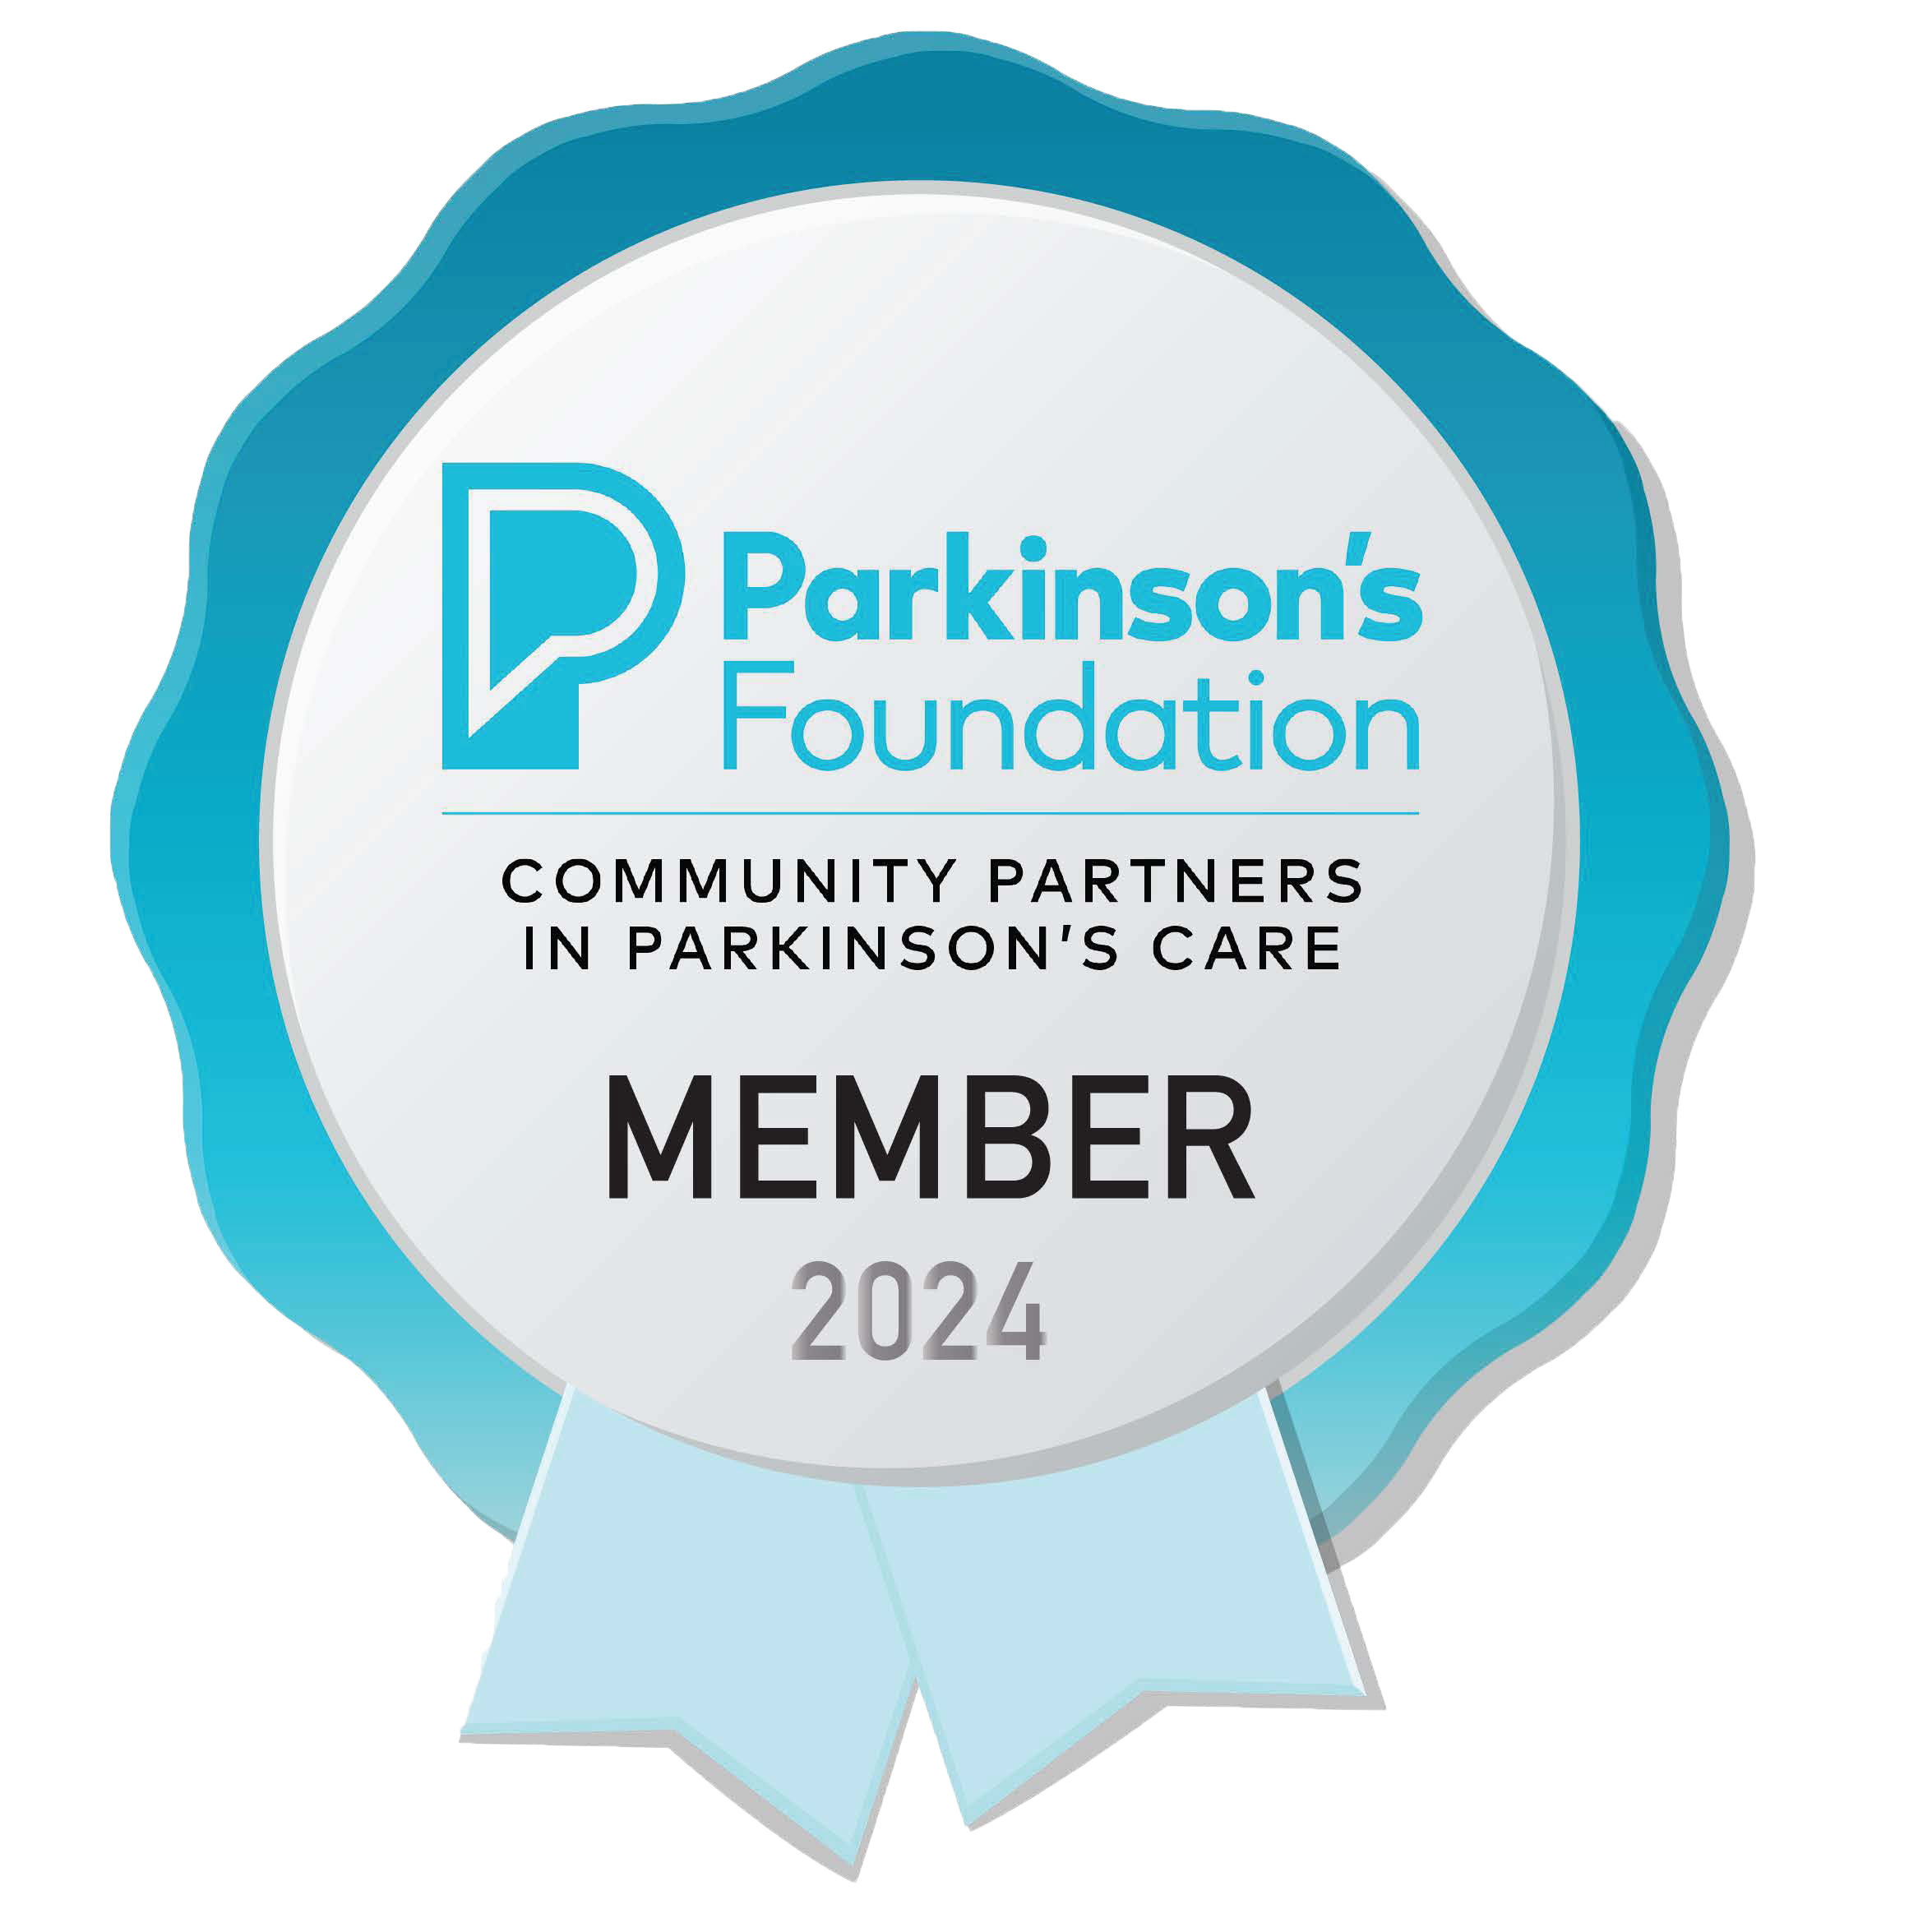 Parkinson's Foundation Community Partners in Parkinson's Care Member